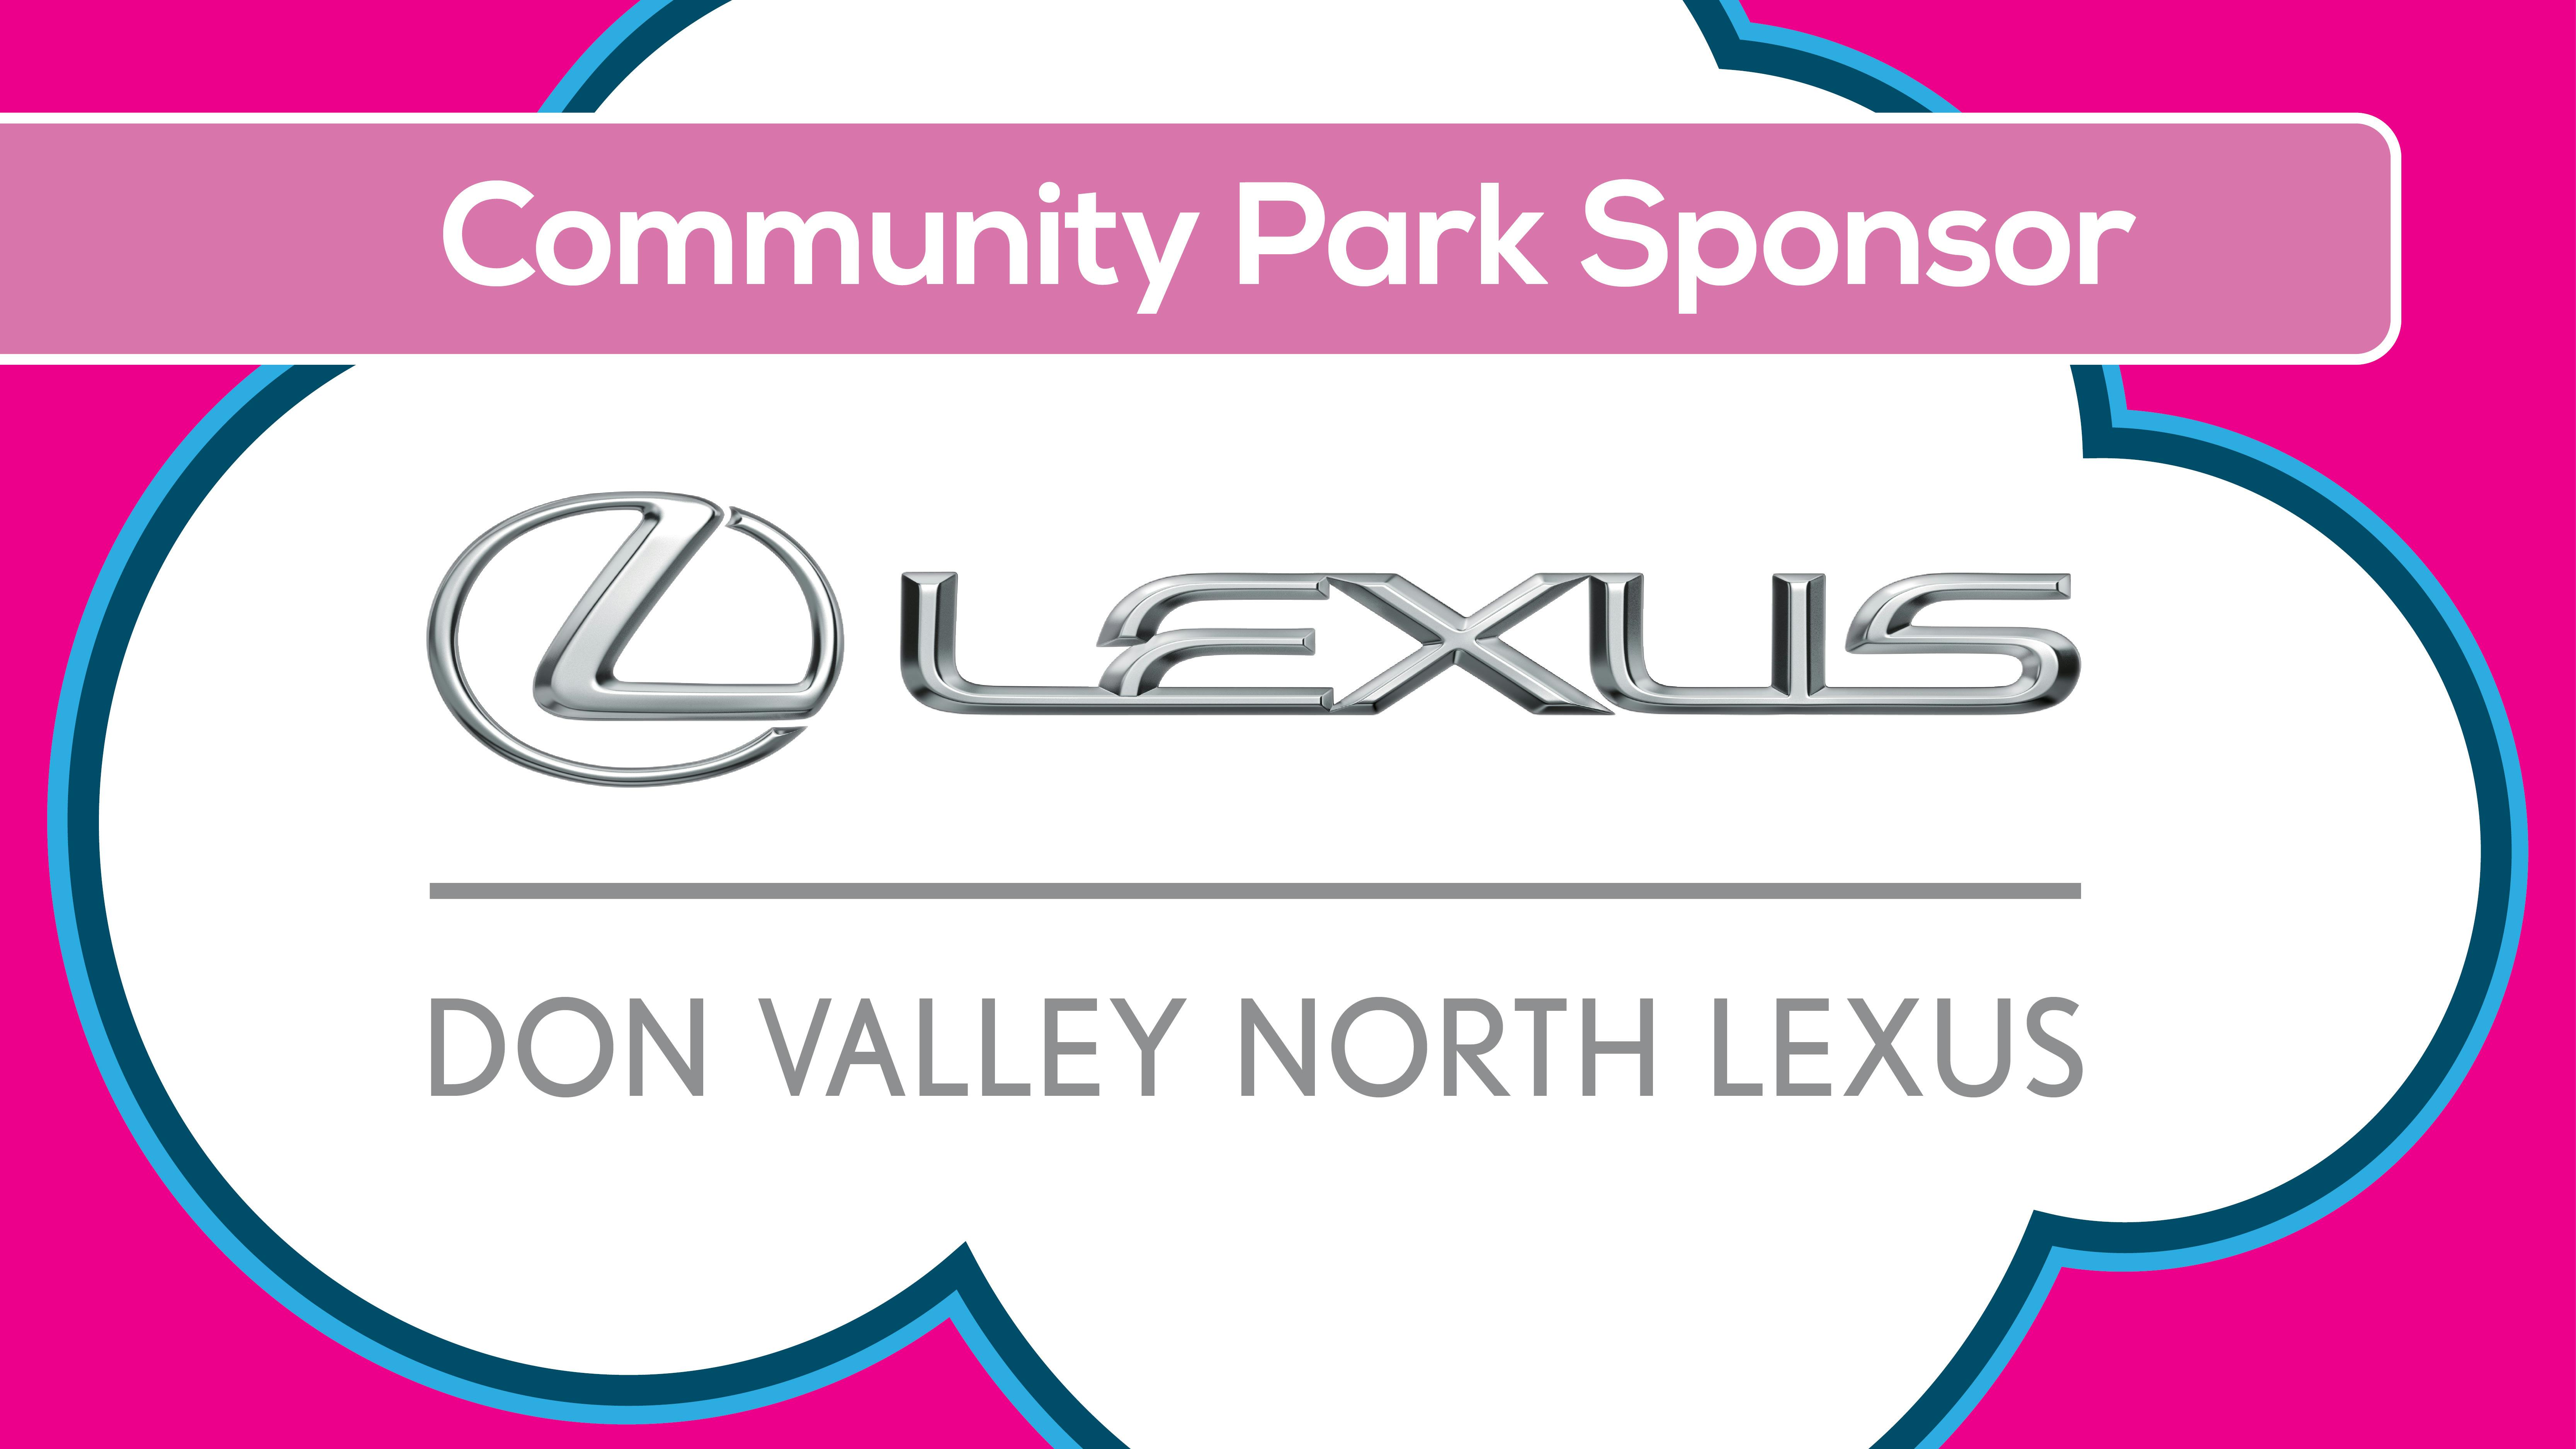 Don Valley North Lexus - Community Park Sponsor